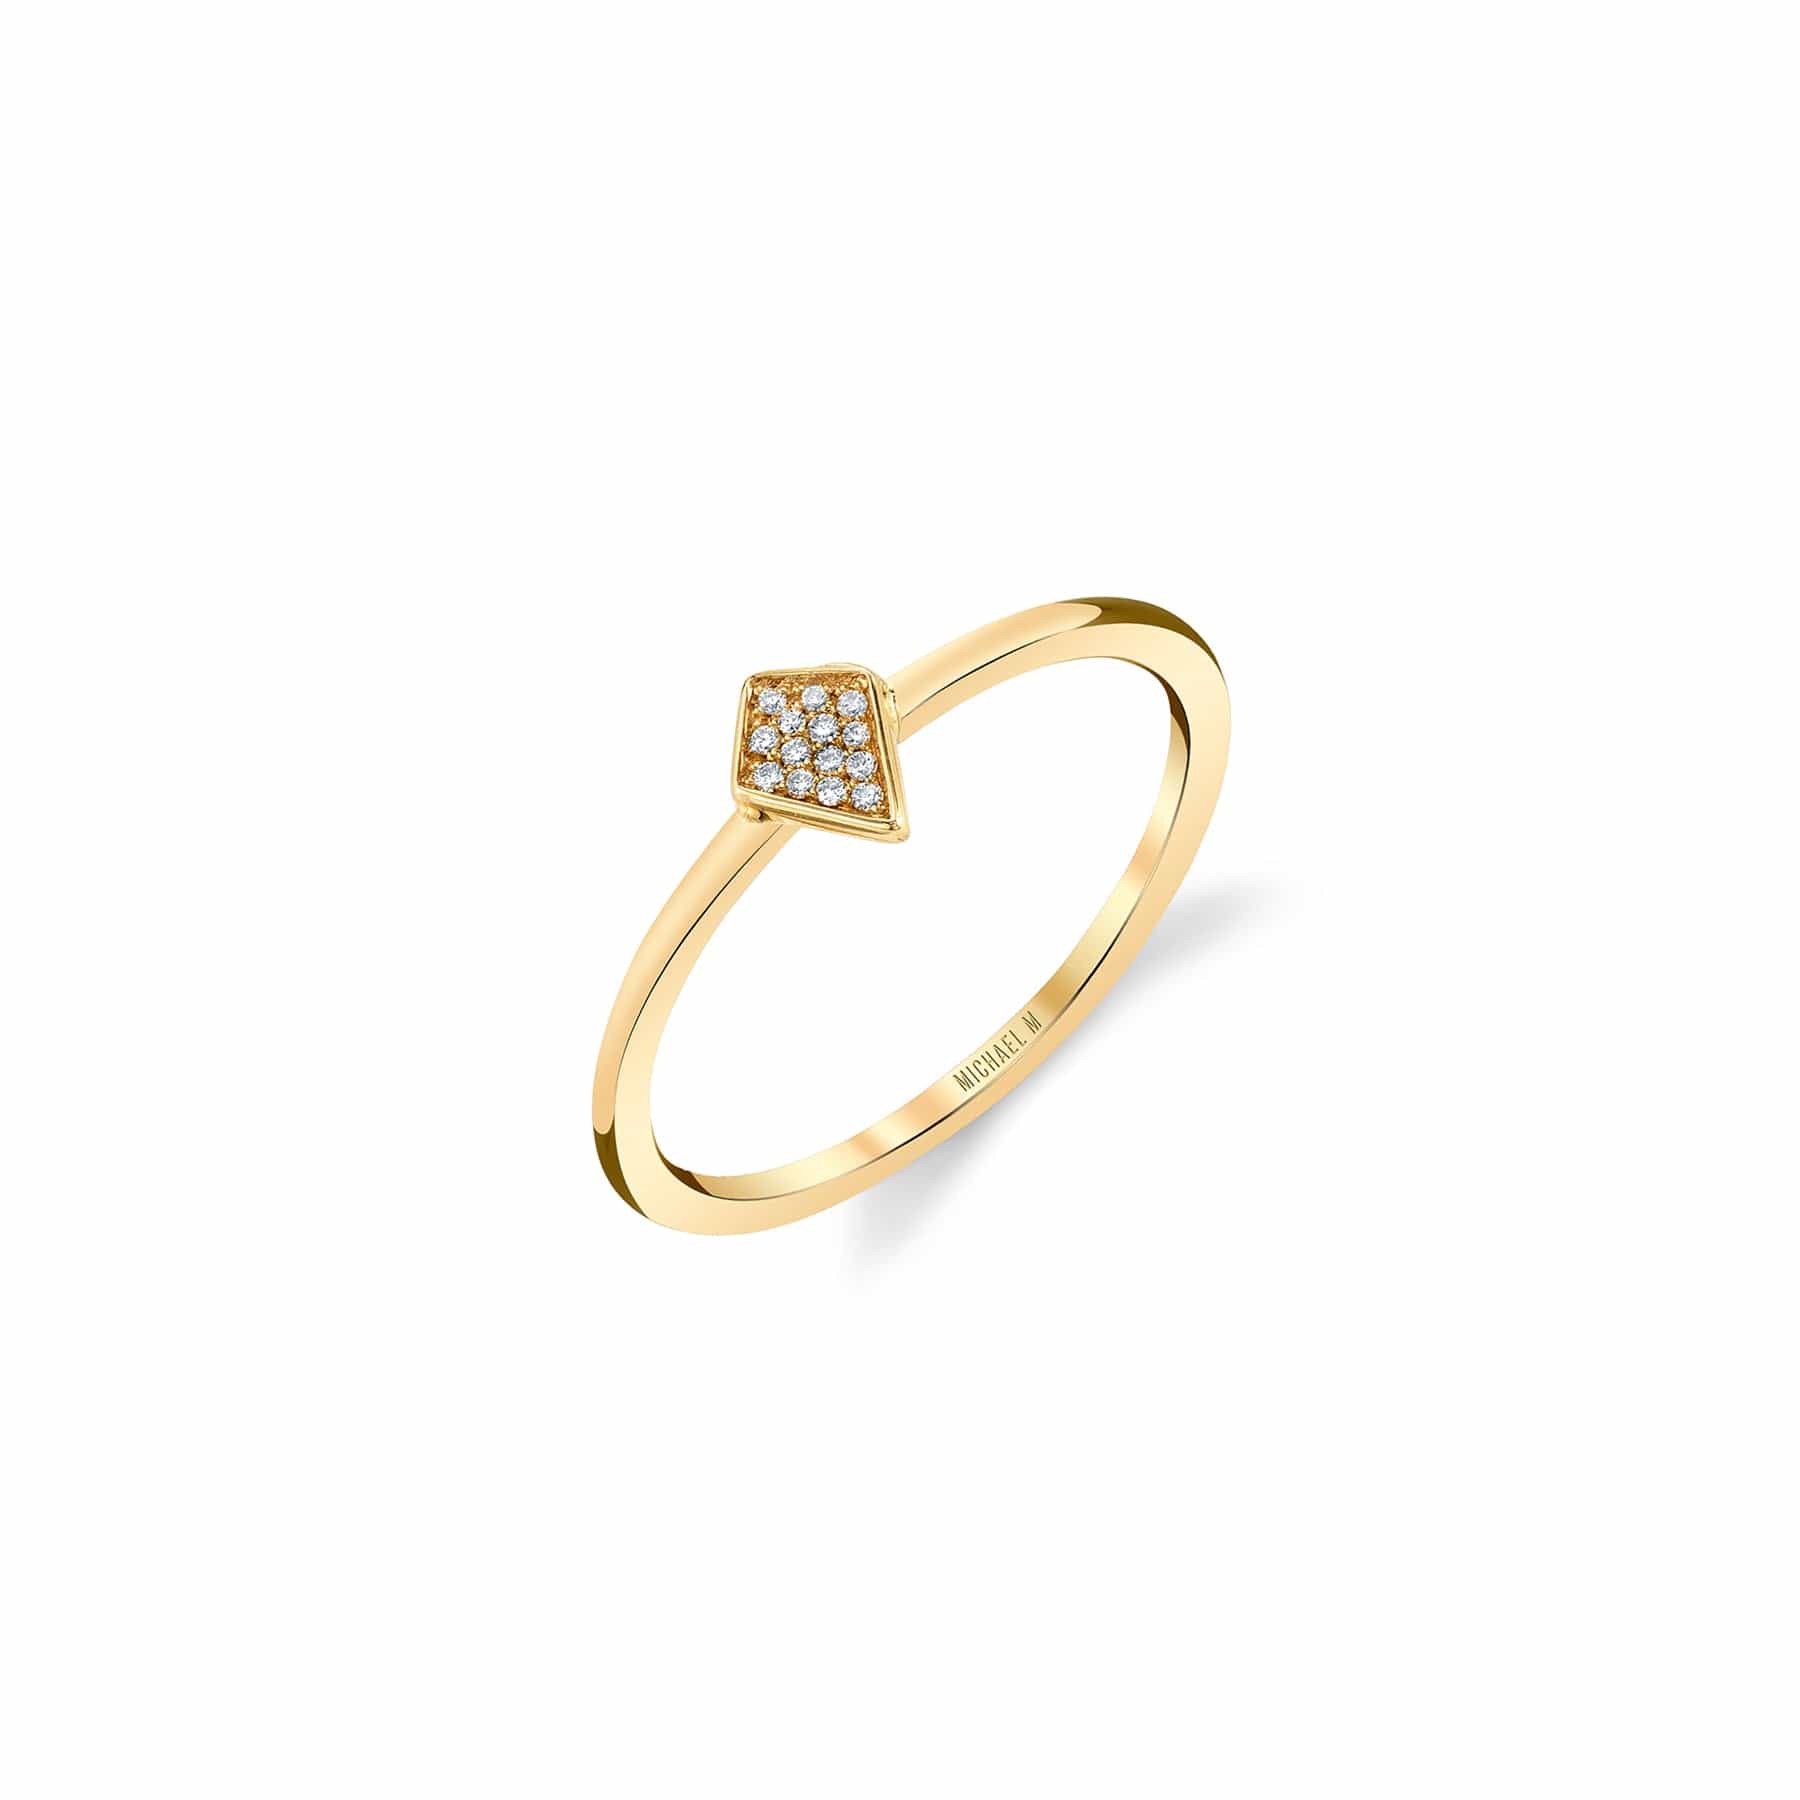 MICHAEL M Fashion Rings 14K Yellow Gold / 6.5 Micro Pavé Diamond Kite Ring F297-YG6.5